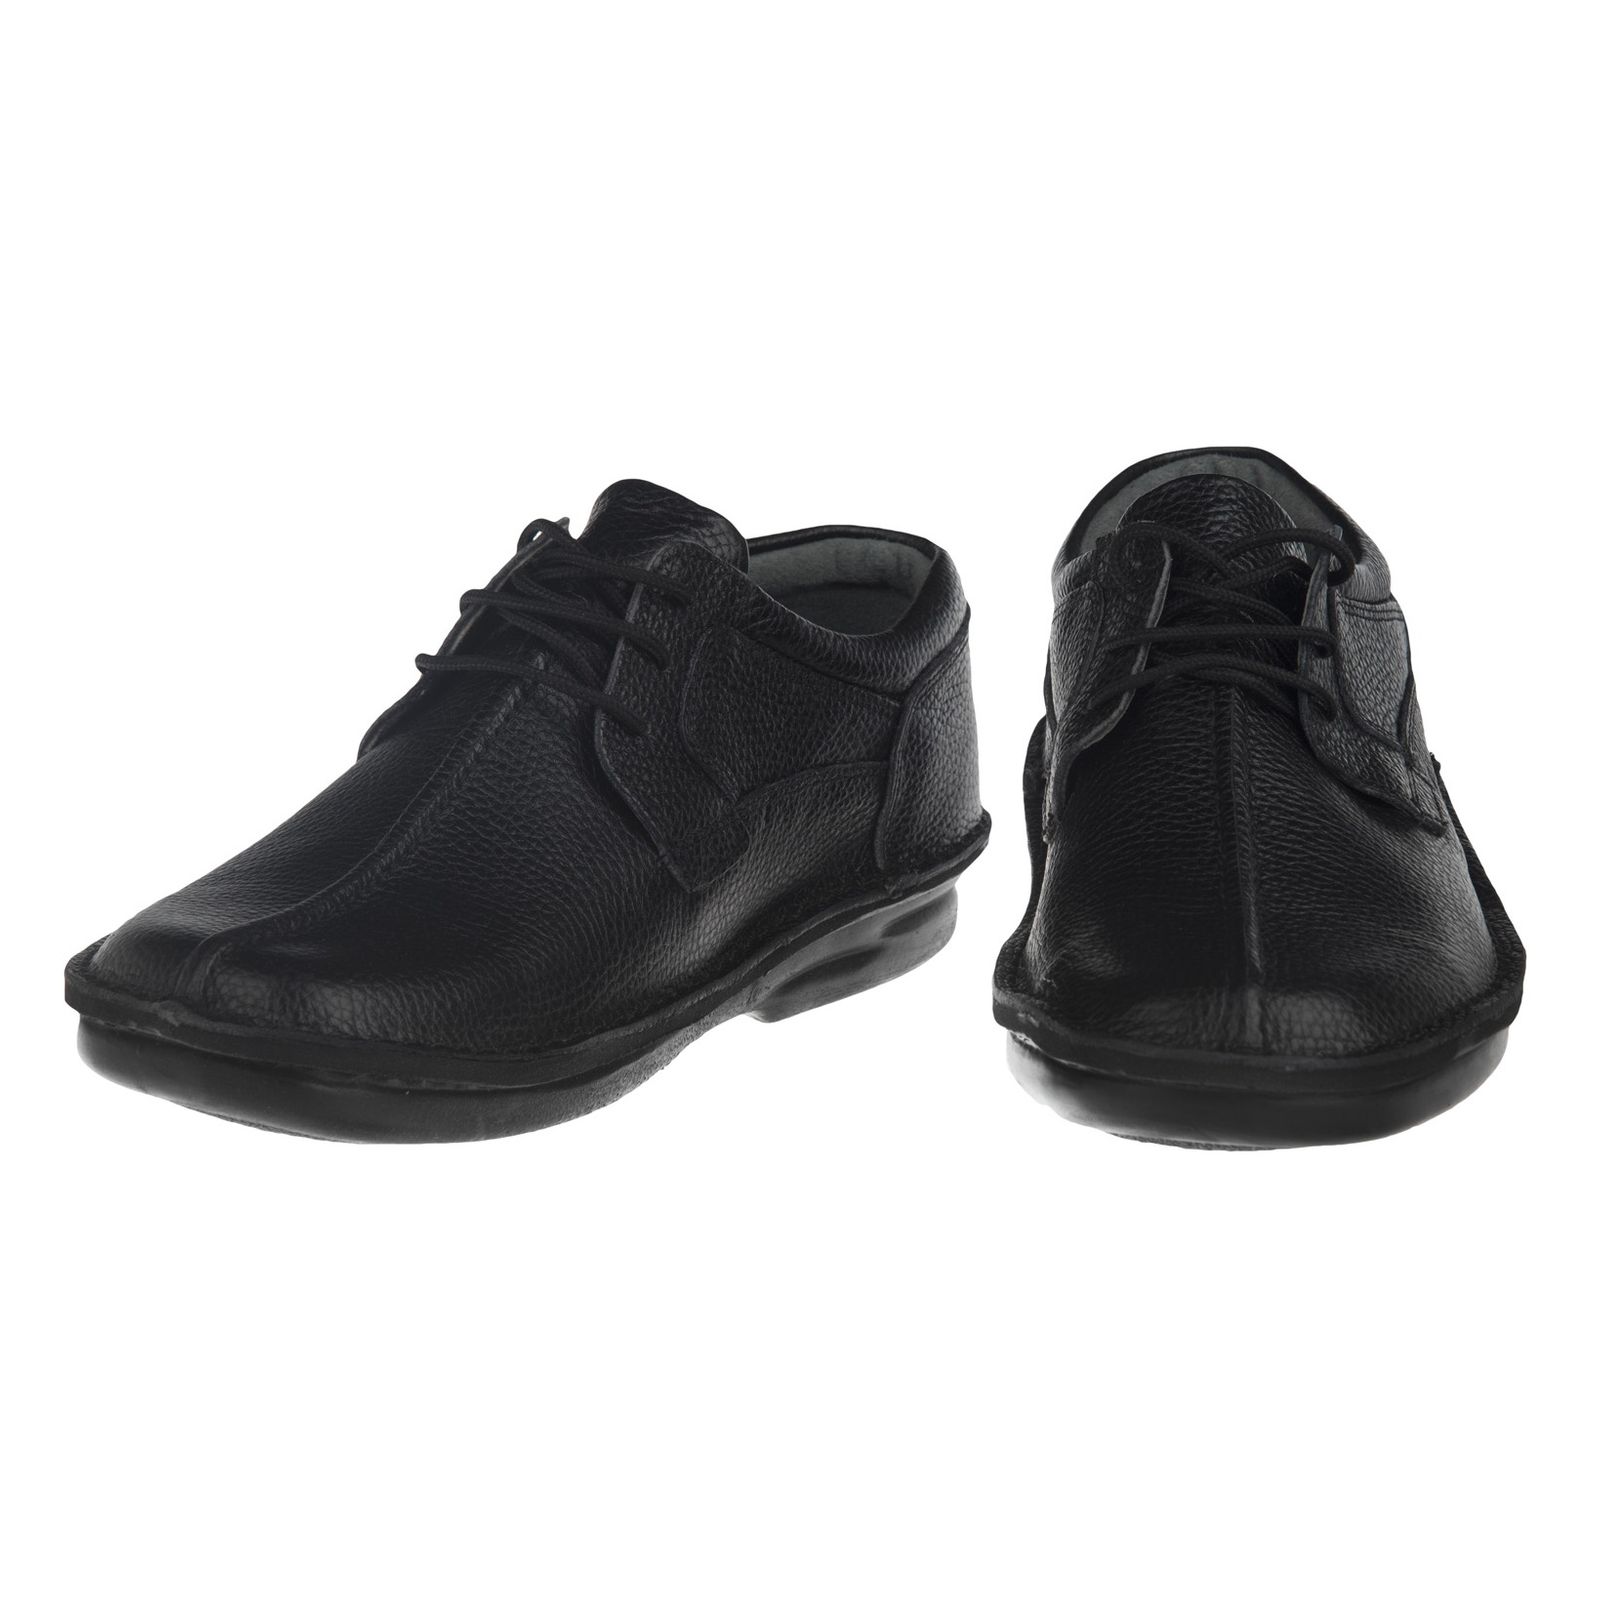 کفش روزمره مردانه بلوط مدل 7011T503-101 - مشکی - 4